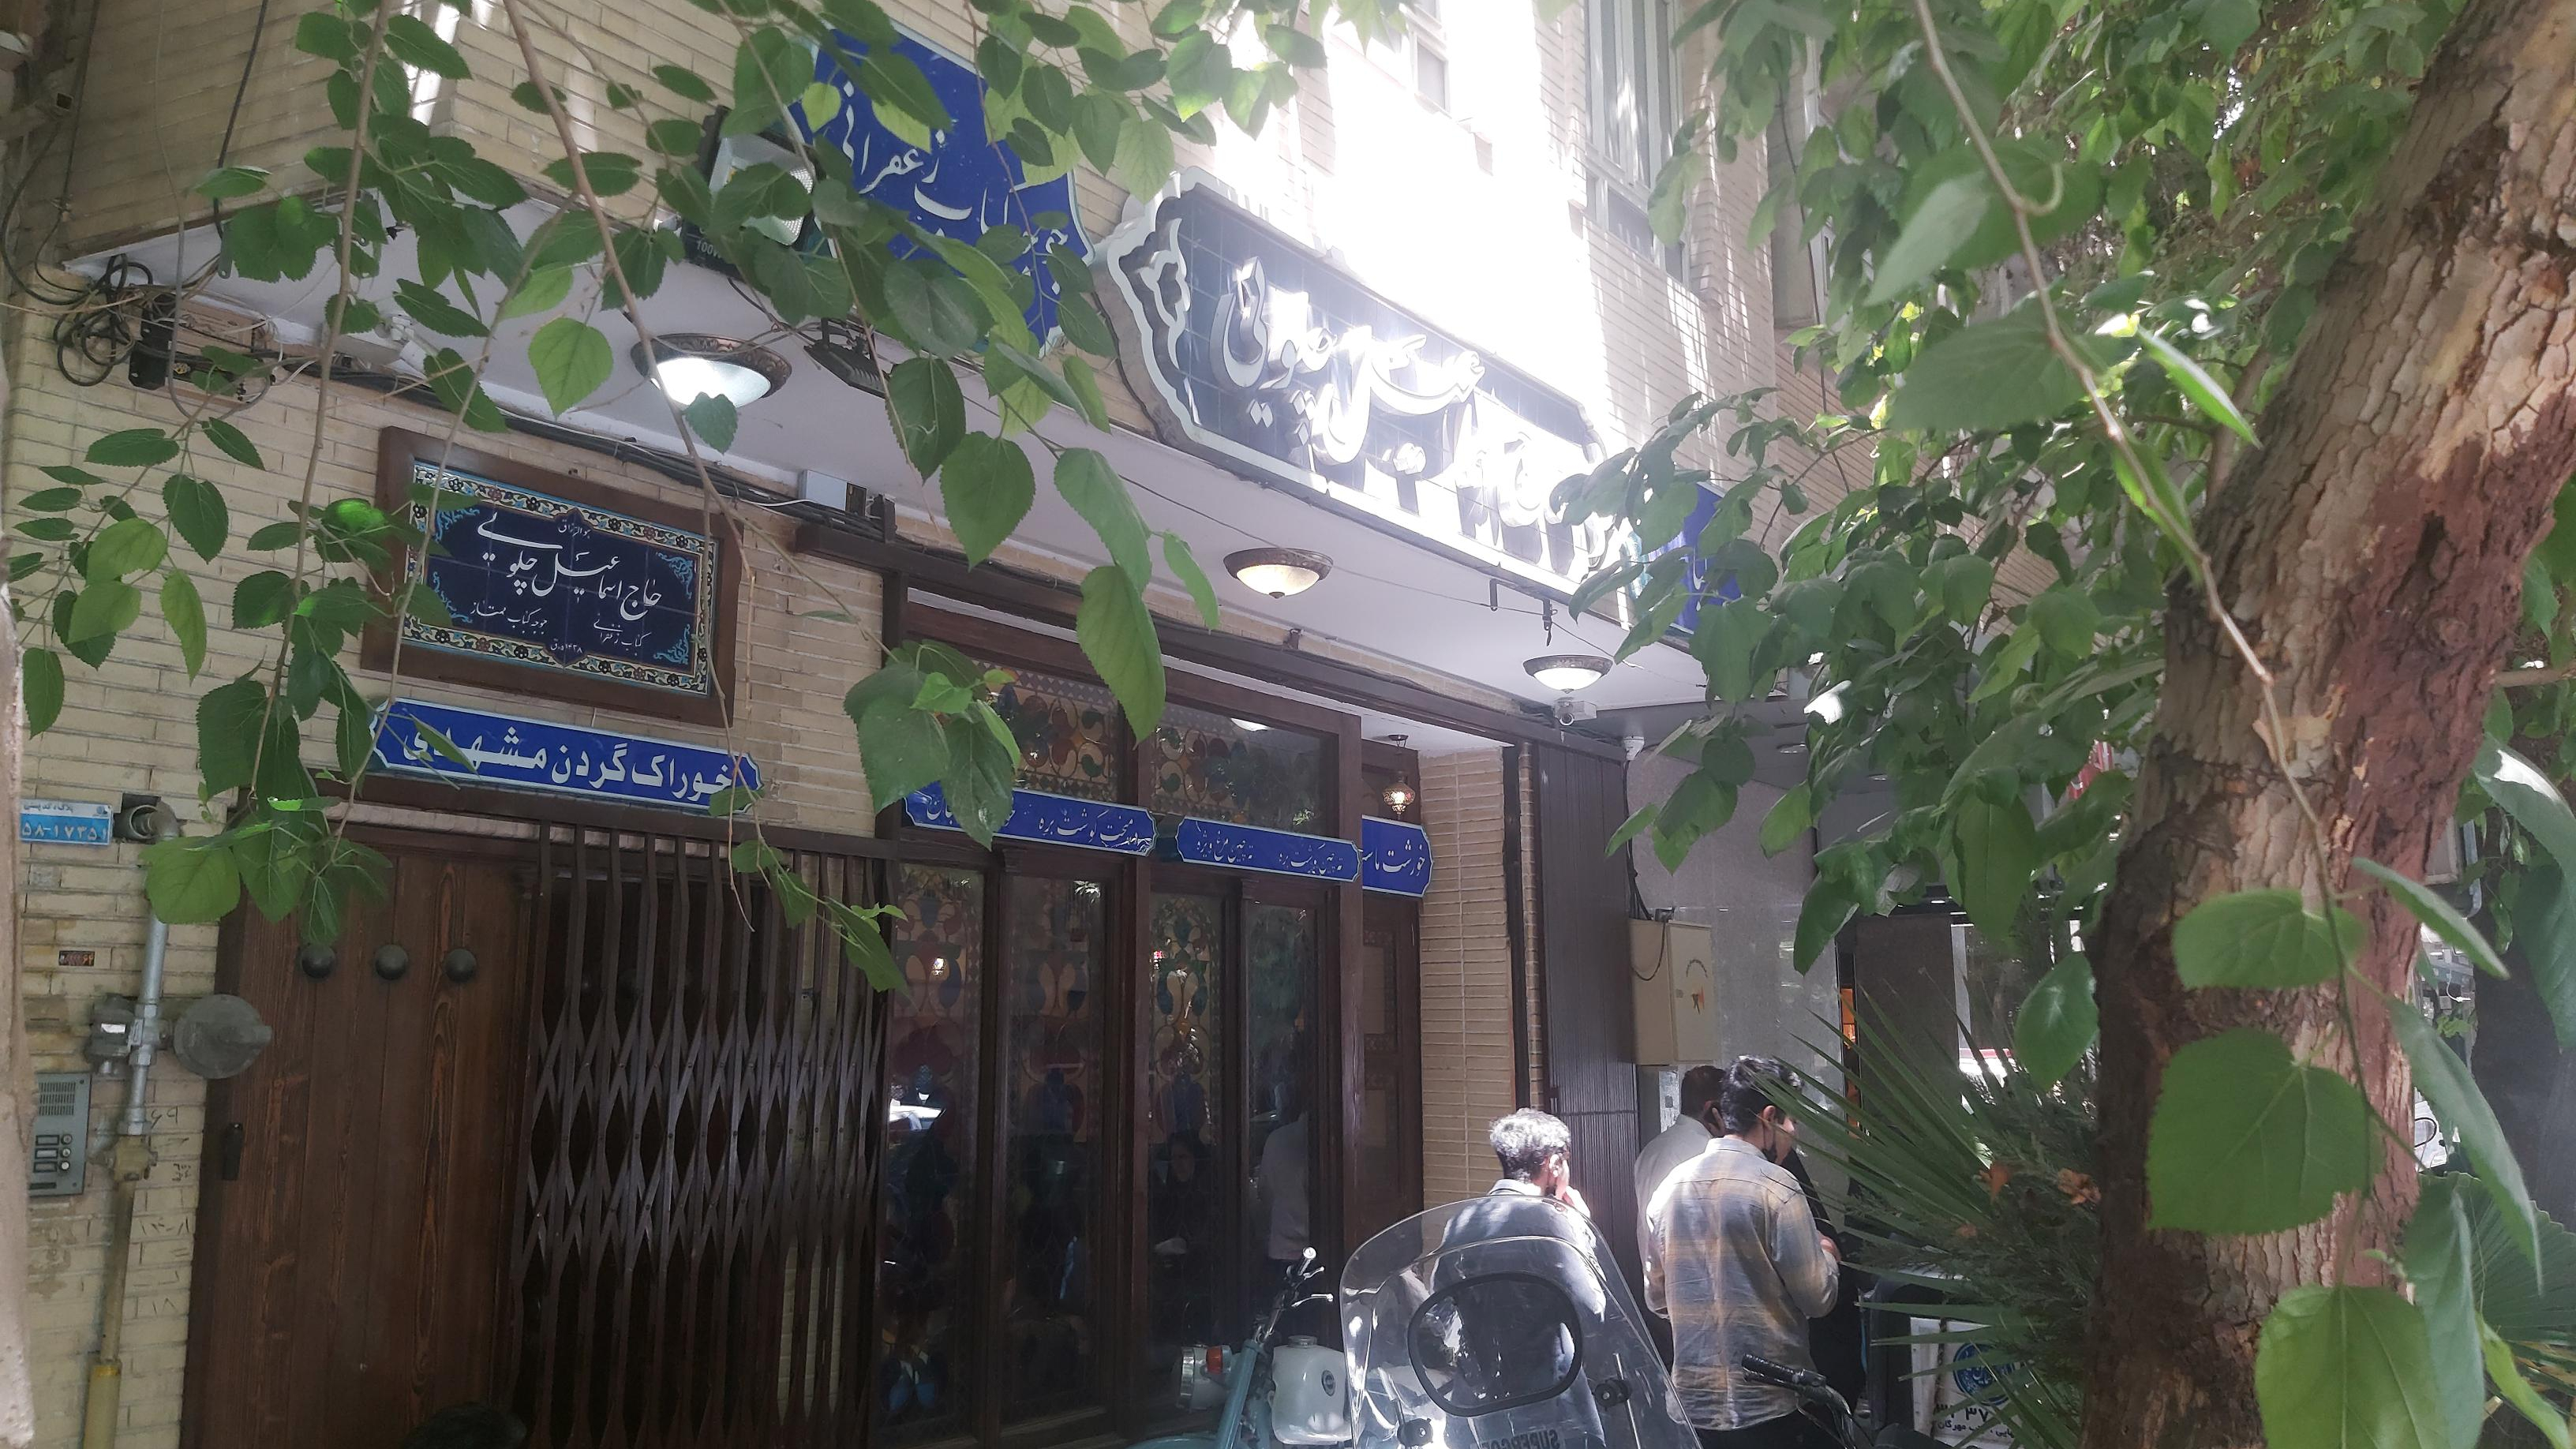 رستوران سنتی حاج اسماعیل چلویی